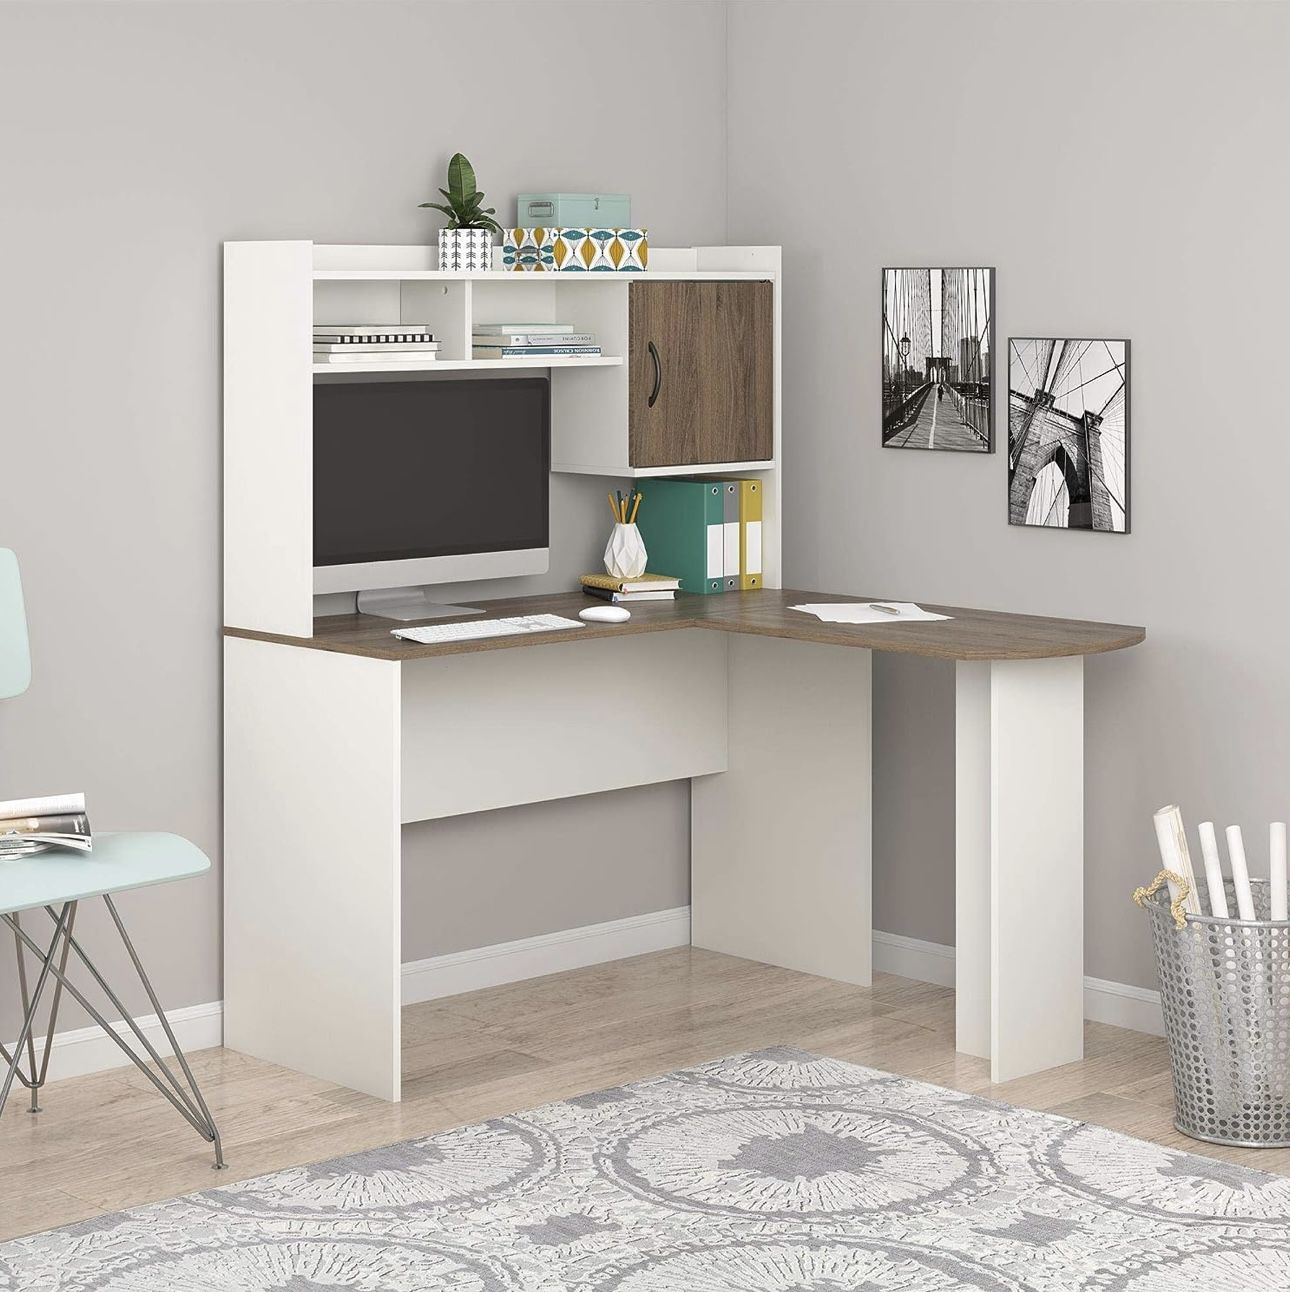 Mainstays Corner Desk/L-Shaped Desk - White ( Great Condition )